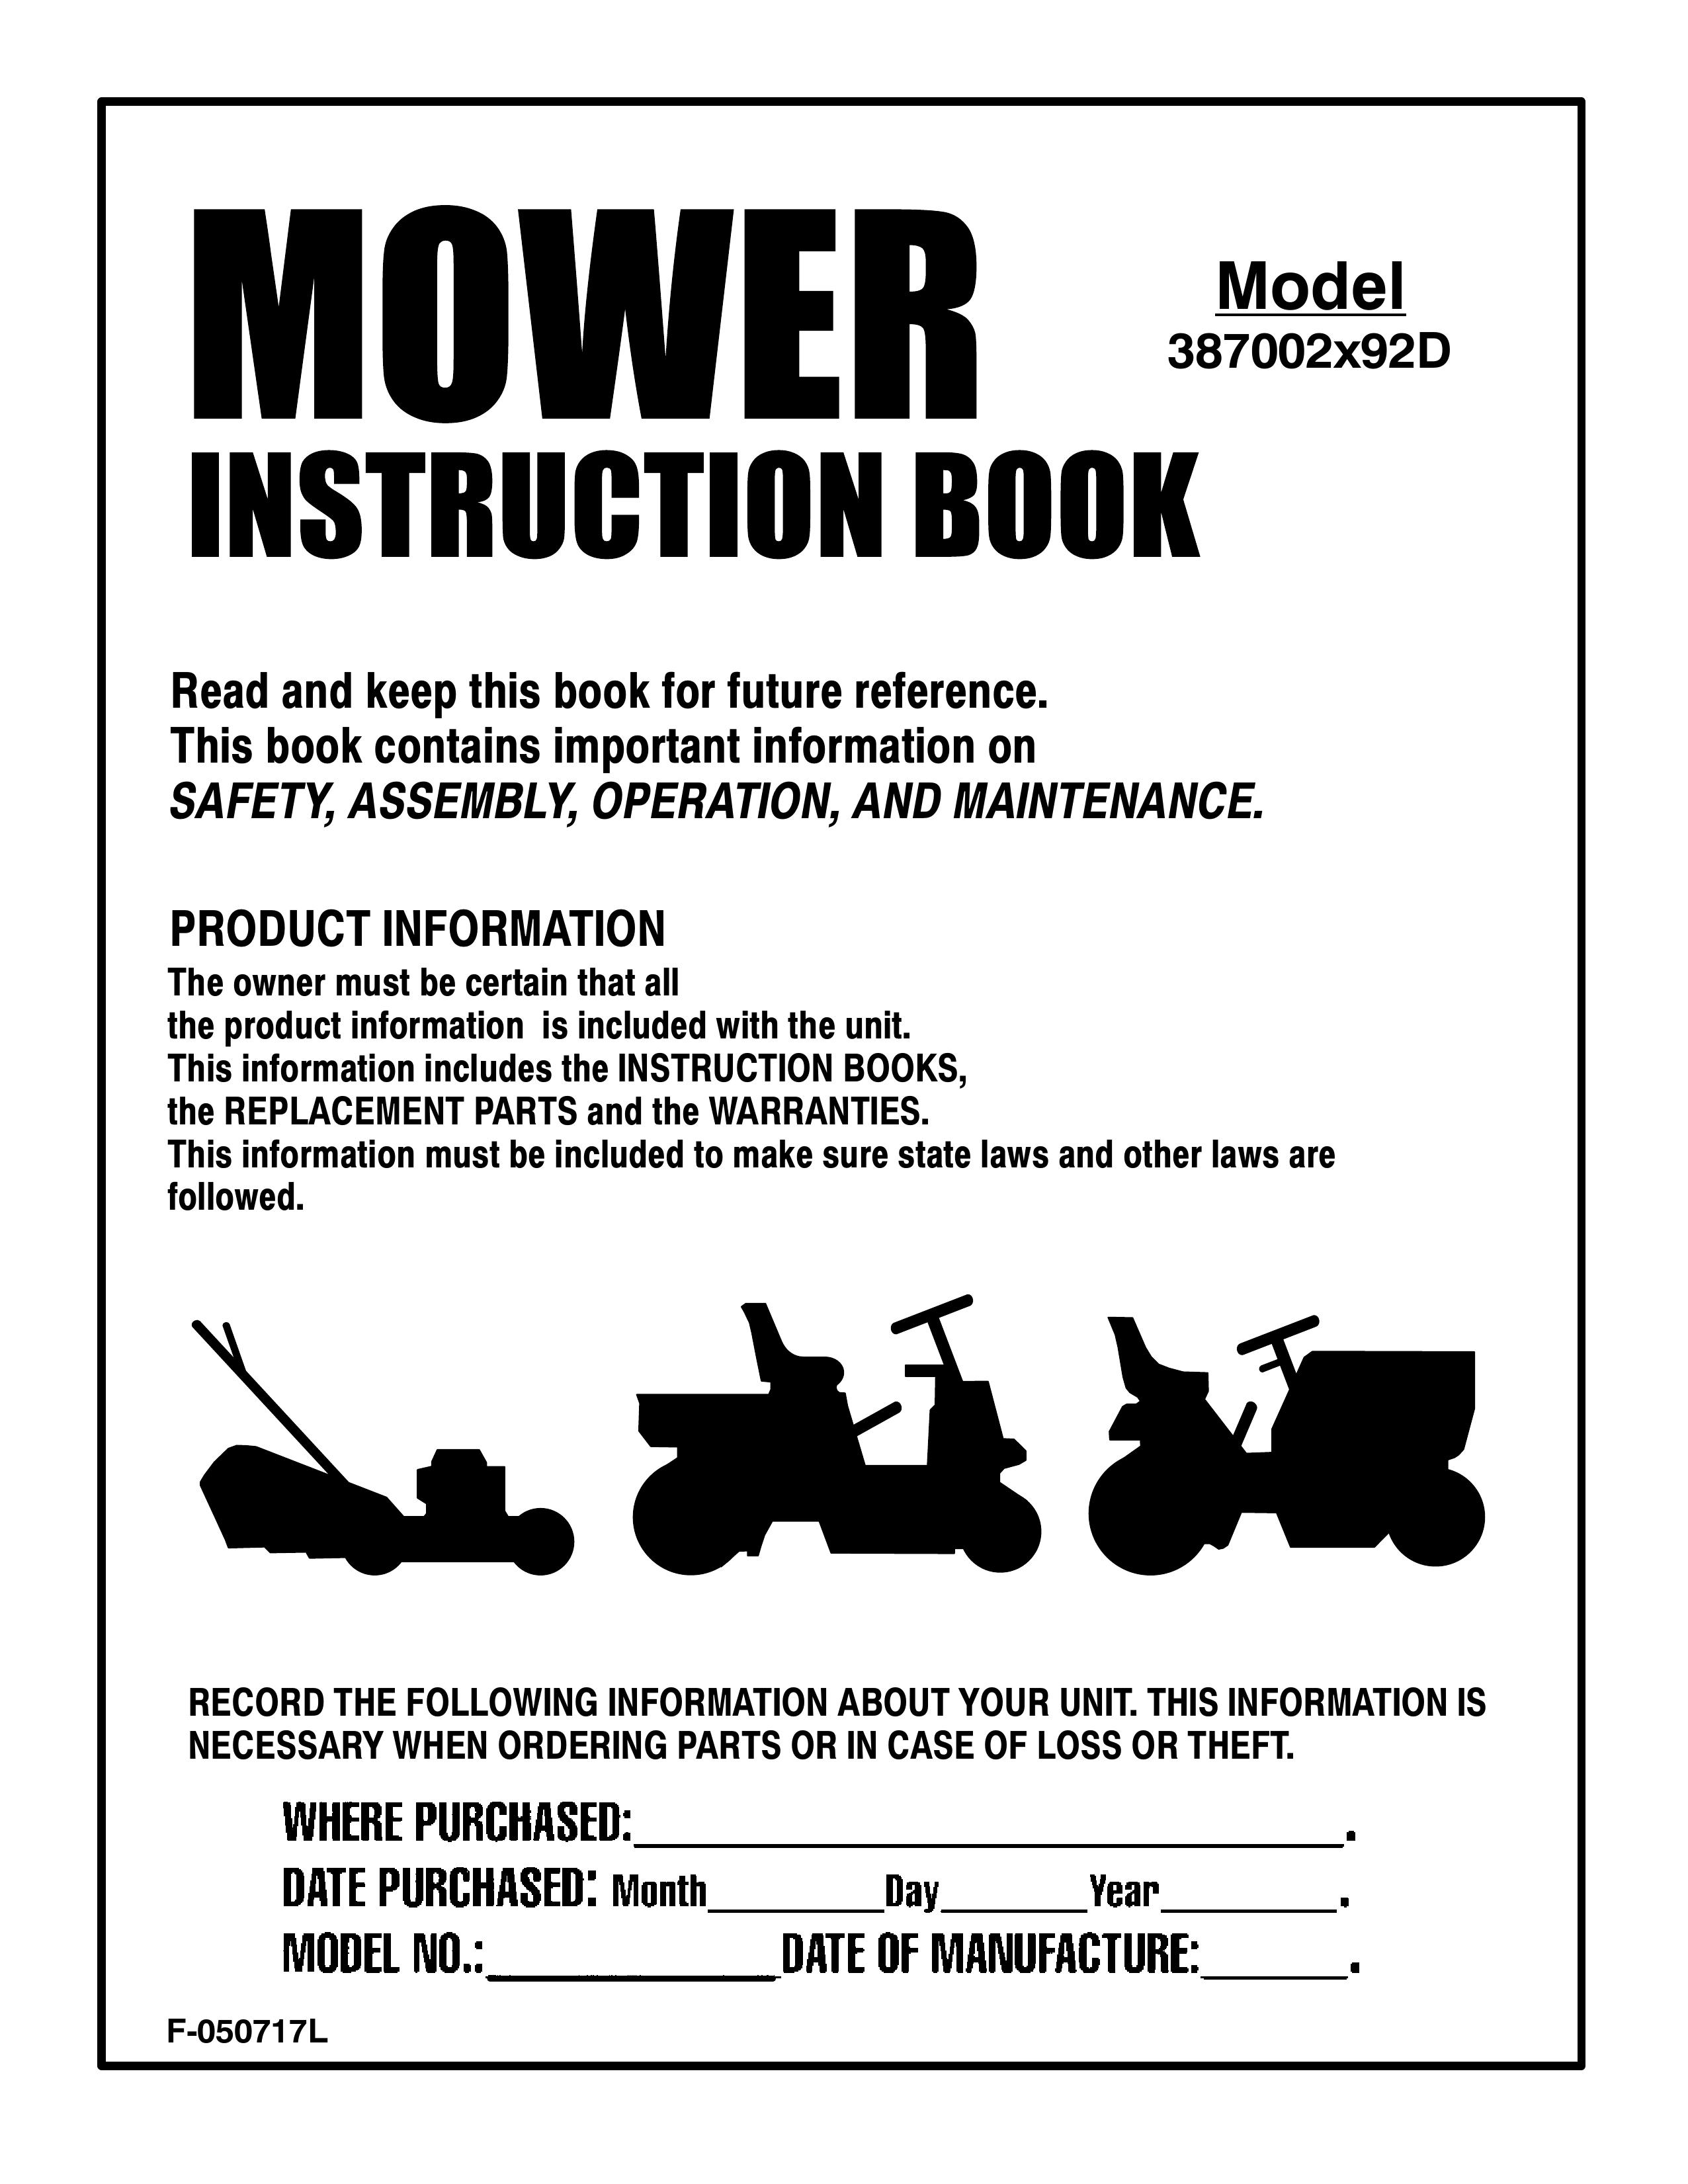 Murray 387002x92D Lawn Mower User Manual